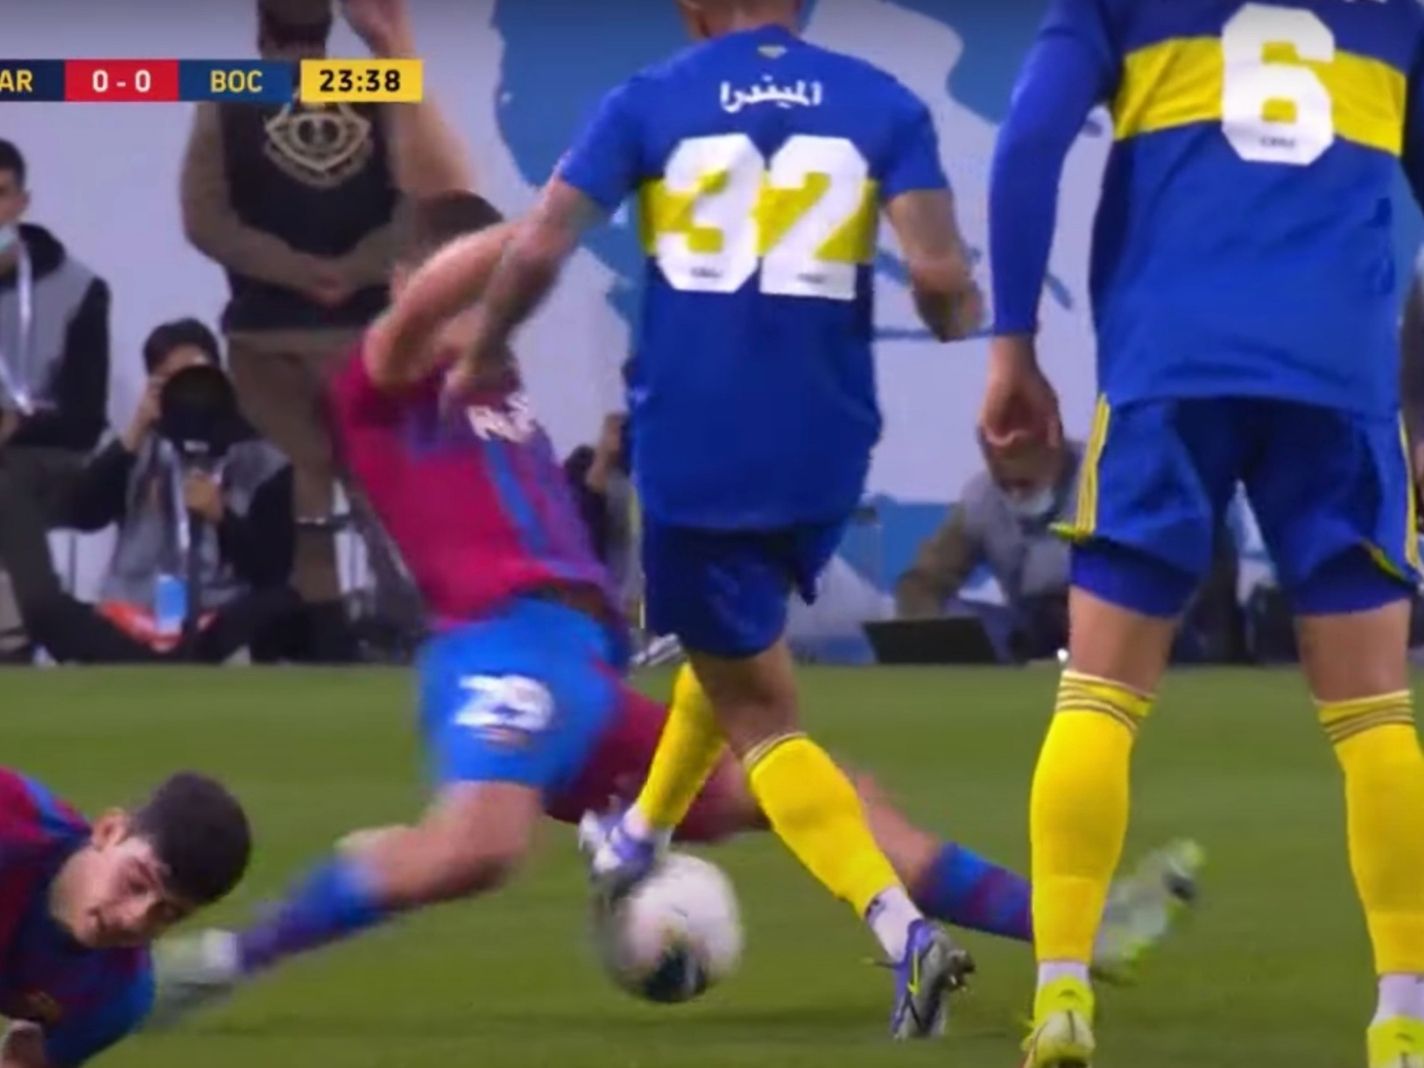 Boca Juniors midfielder Agustin Almendra pulls off sensational nutmeg against Barcelona